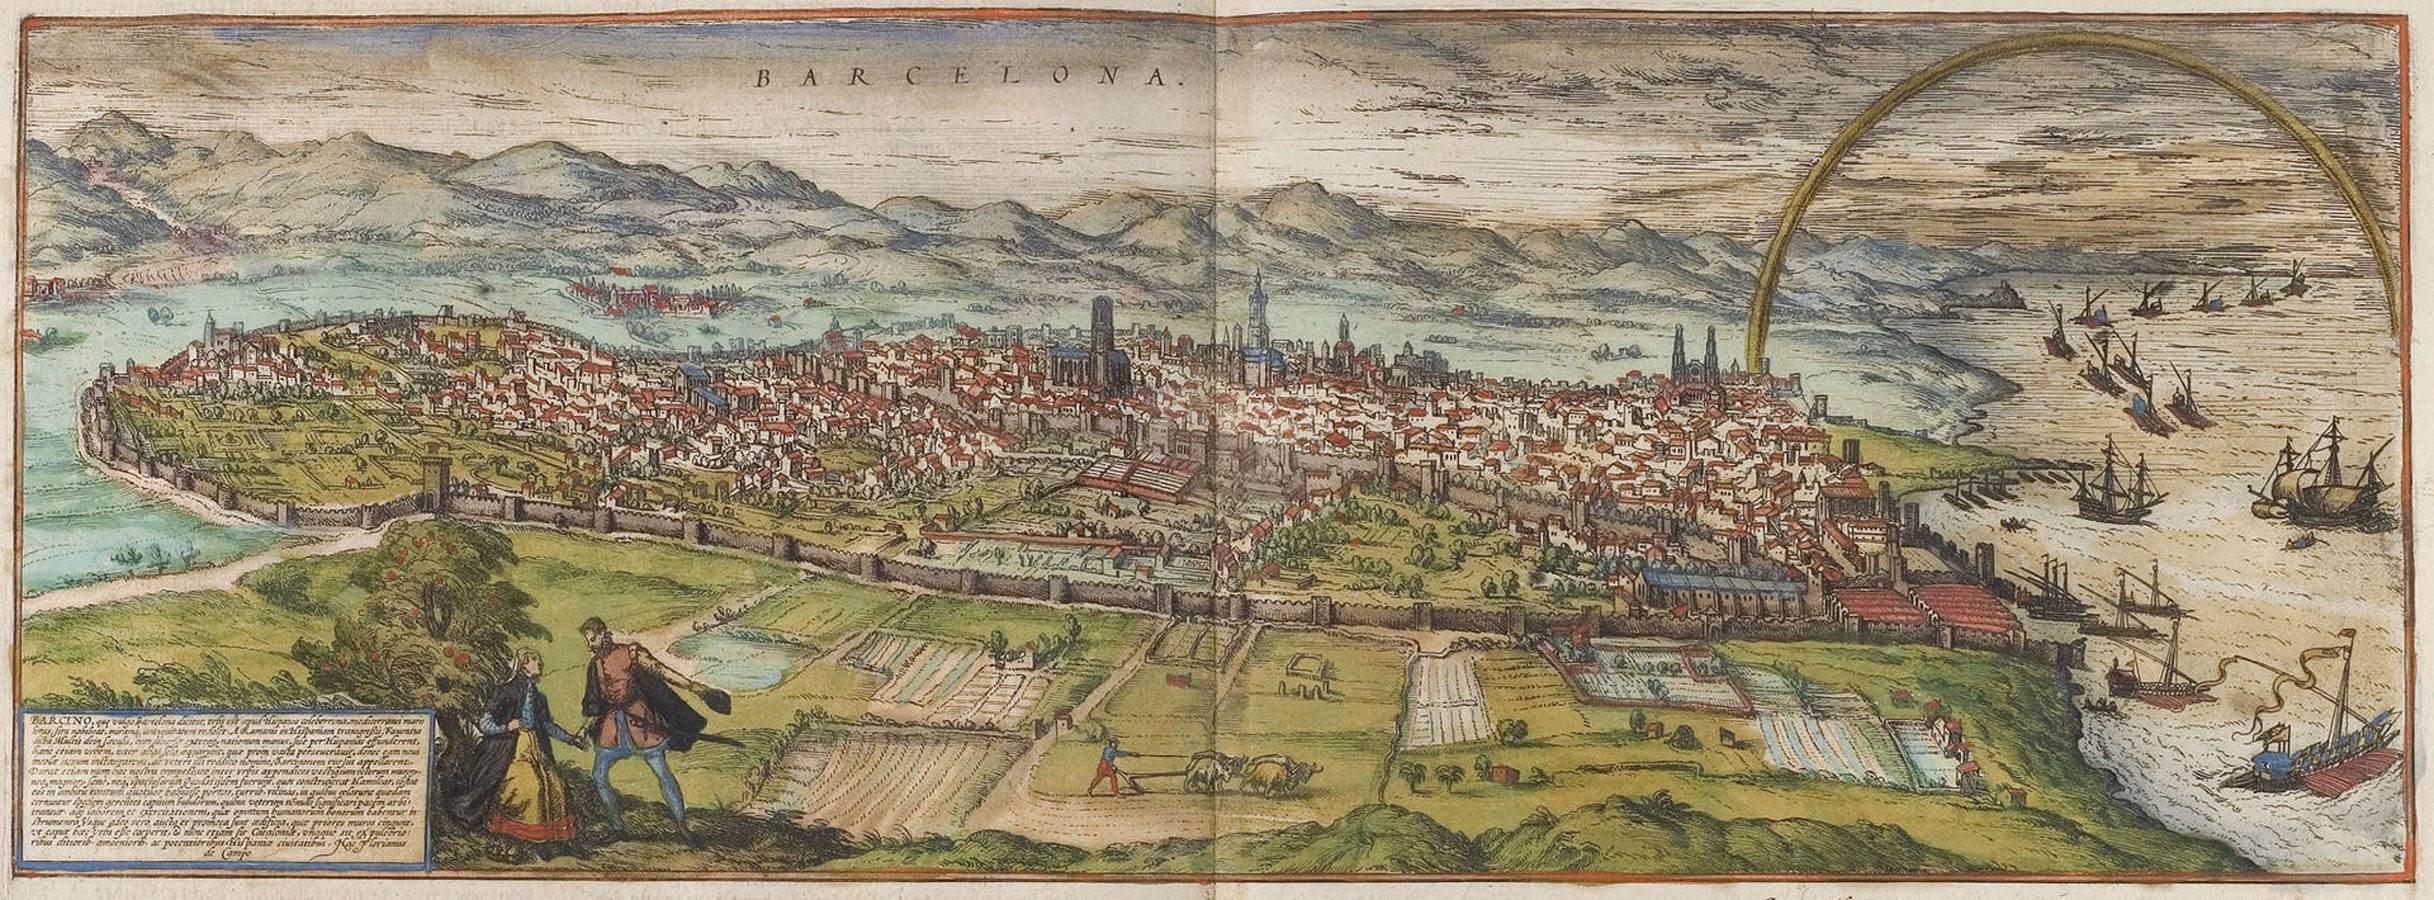 Barcelona. Civitatis Orbis Terrarum, Joris Hoefnagel. (1572).